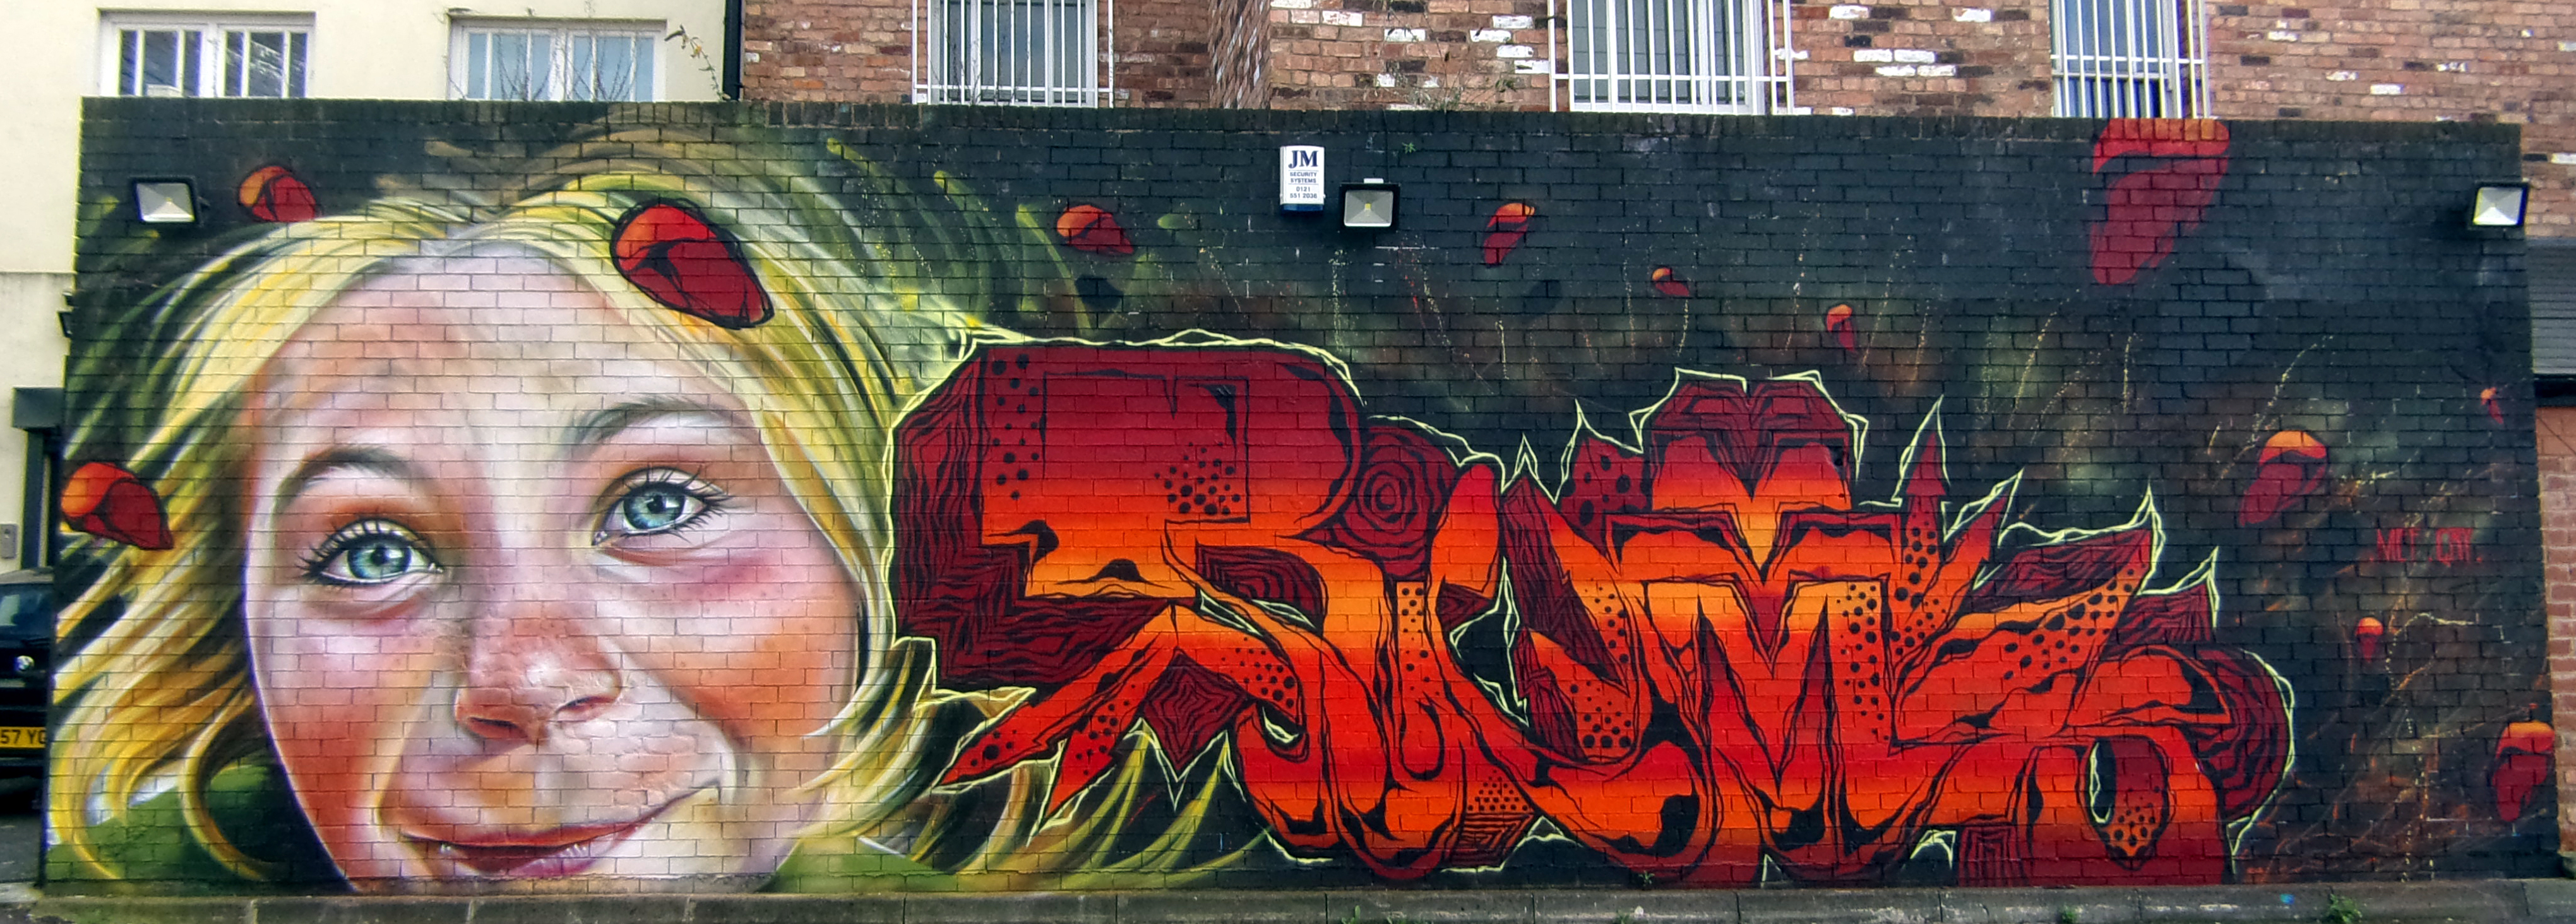 Graffiti 6542  de IRONY capturé par Mephisroth à london United Kingdom